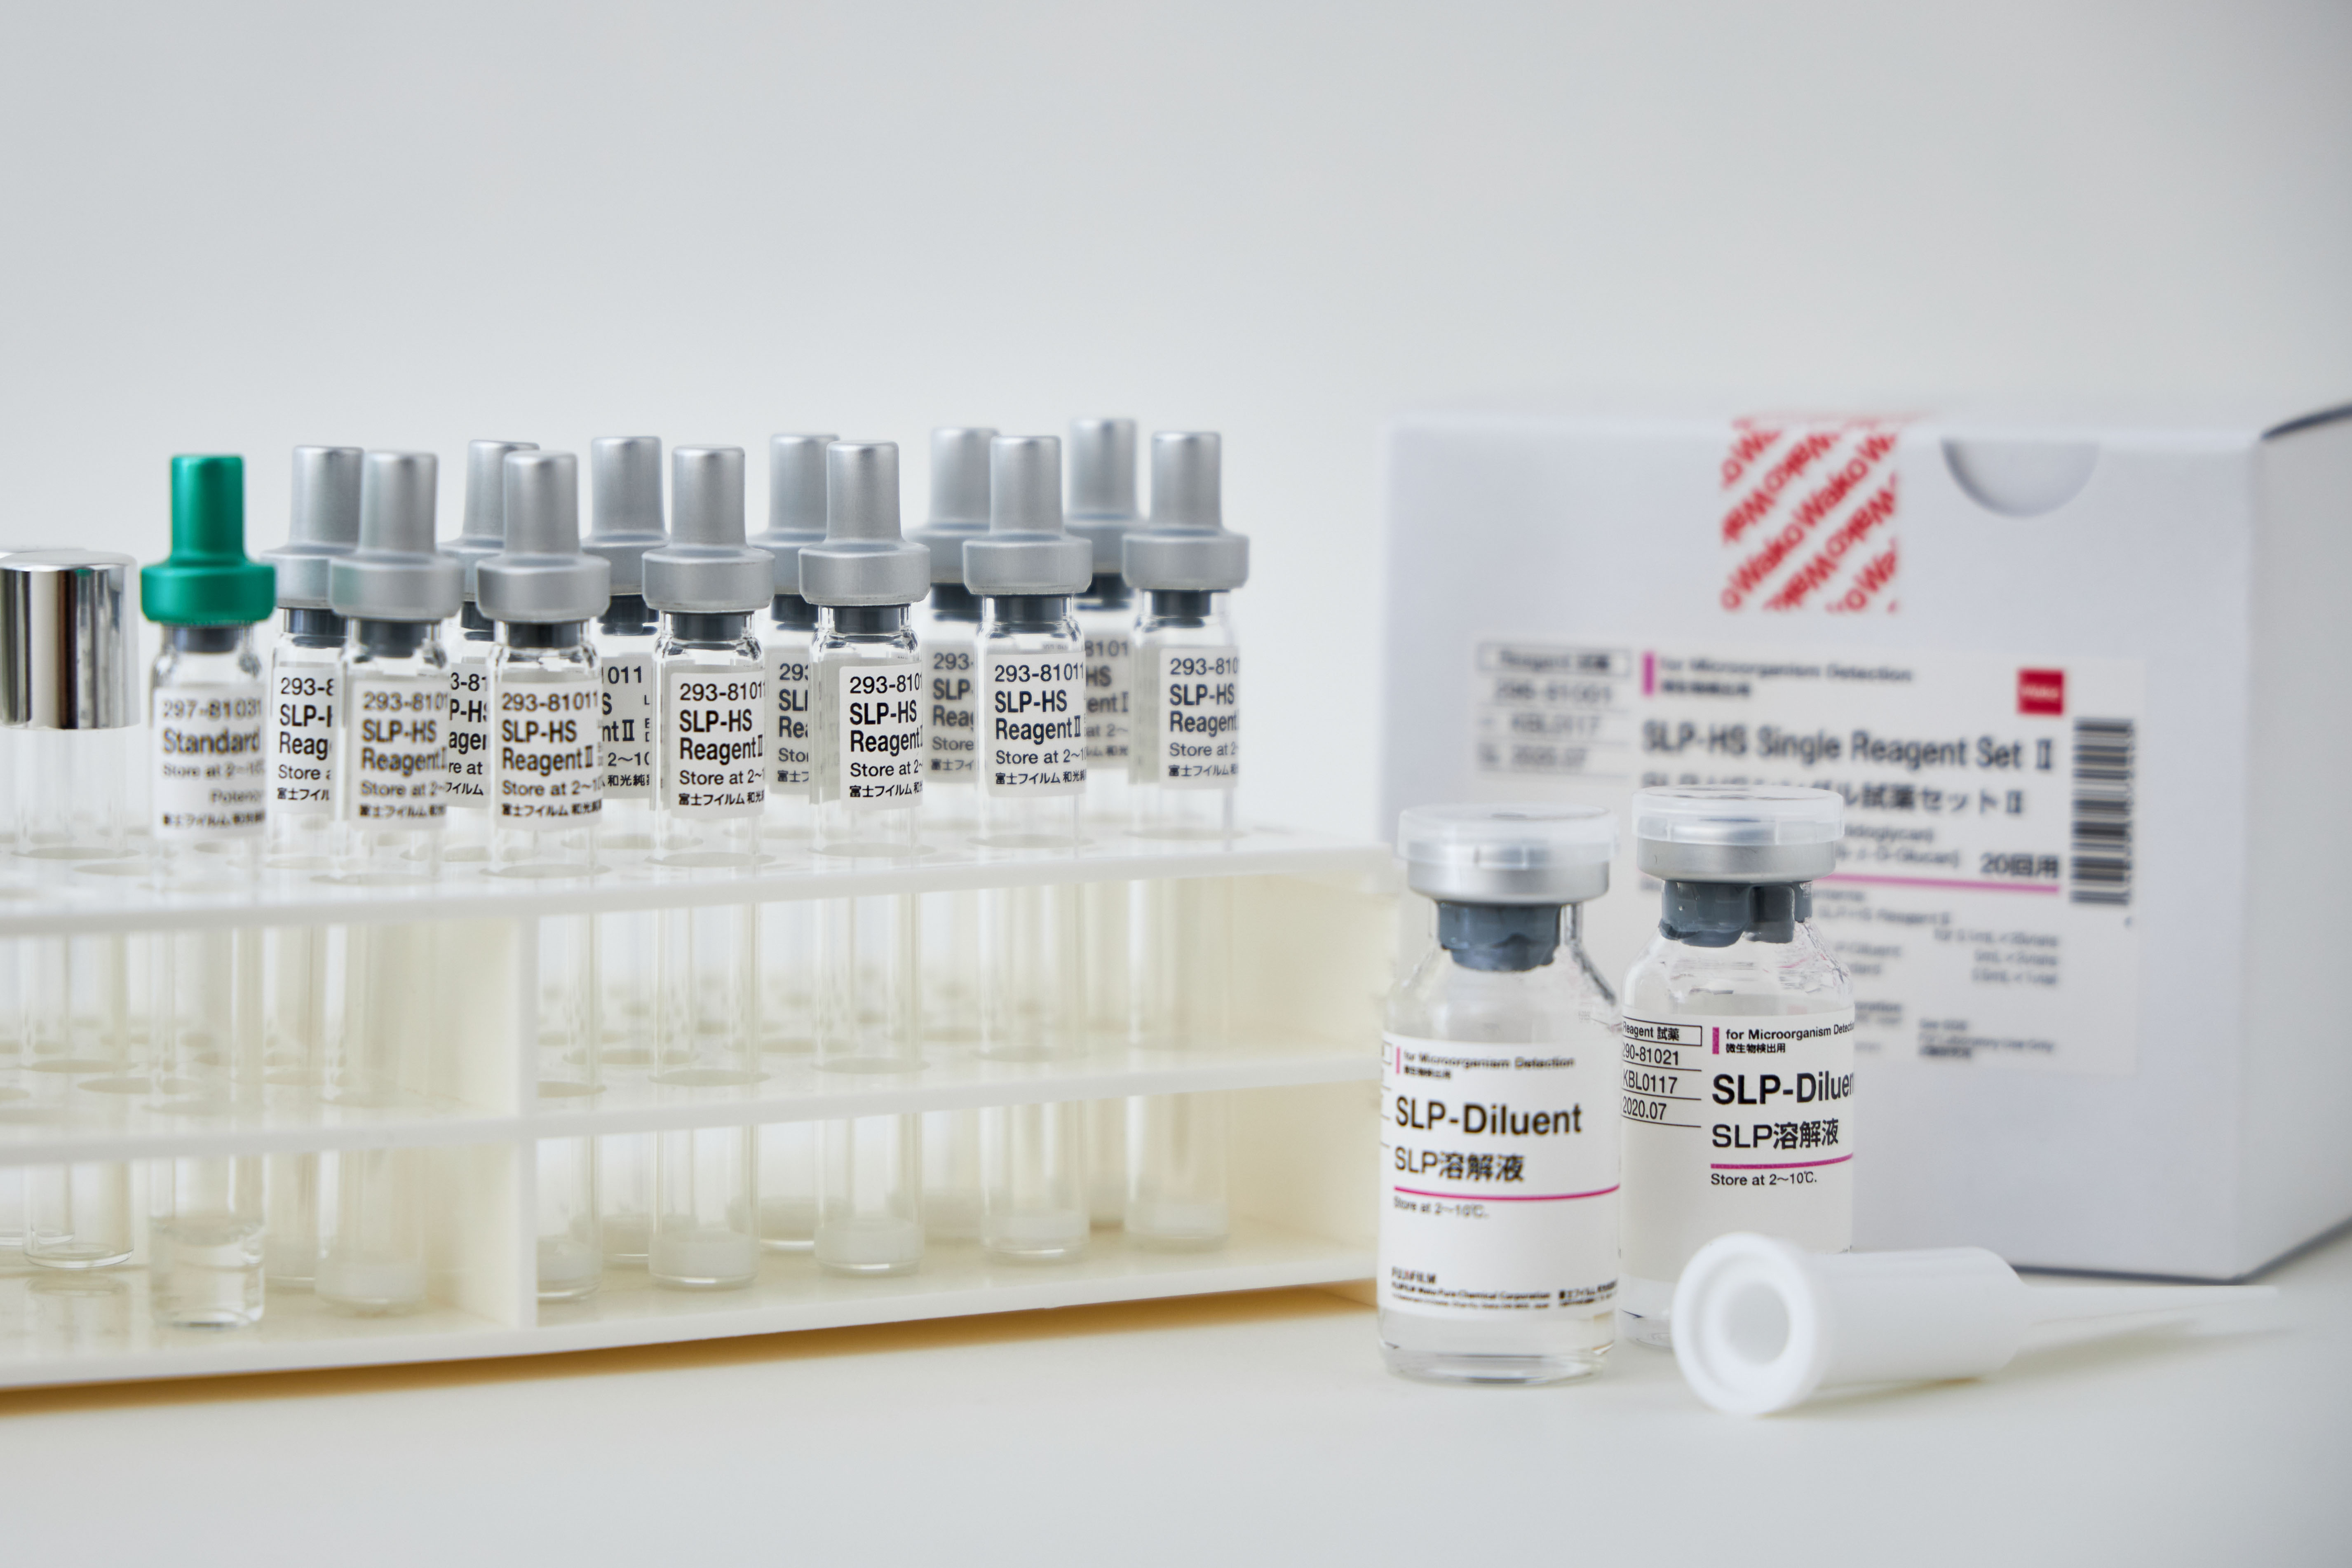 SLP-HS Single Reagent Set II                              细菌、真菌高灵敏度检测试剂